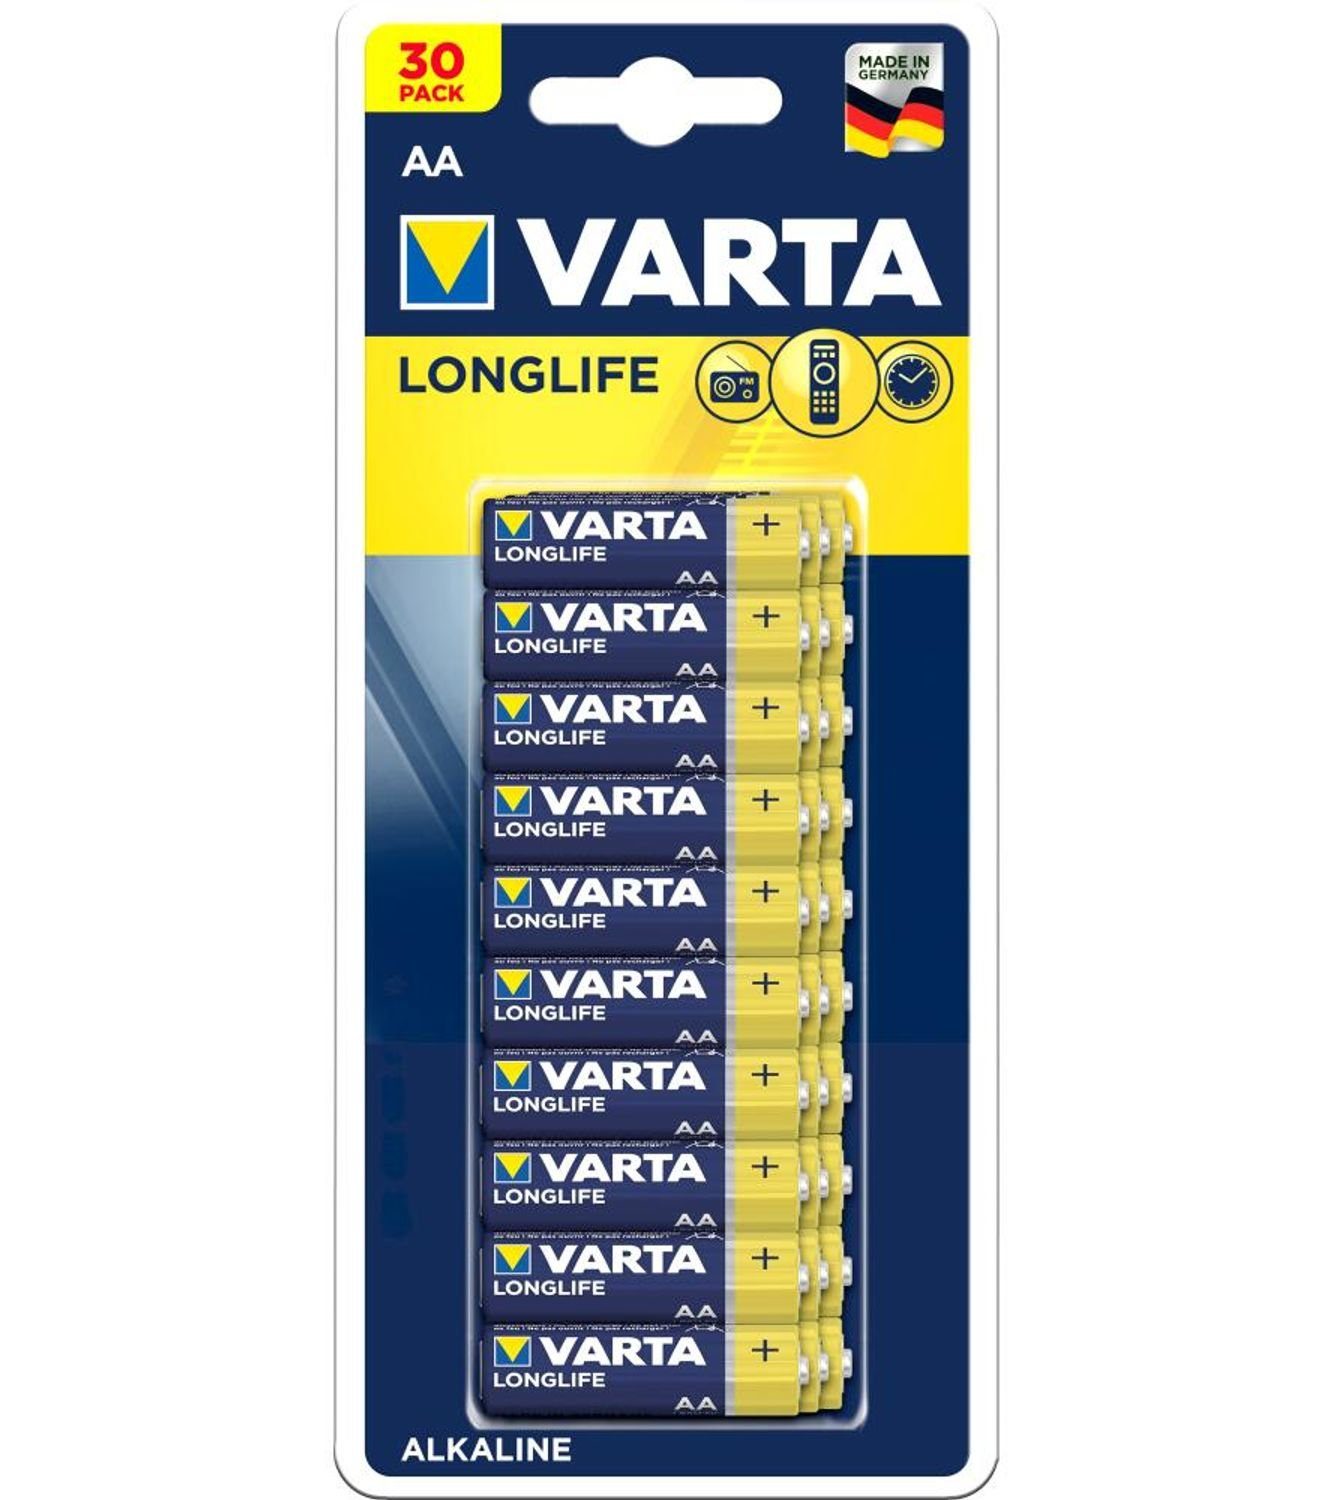 VARTA 12x 30er-Packung Longlife Alkaline-Batterien LR6 AA 1,5V Großpackung  3 Batterie, (360 St)